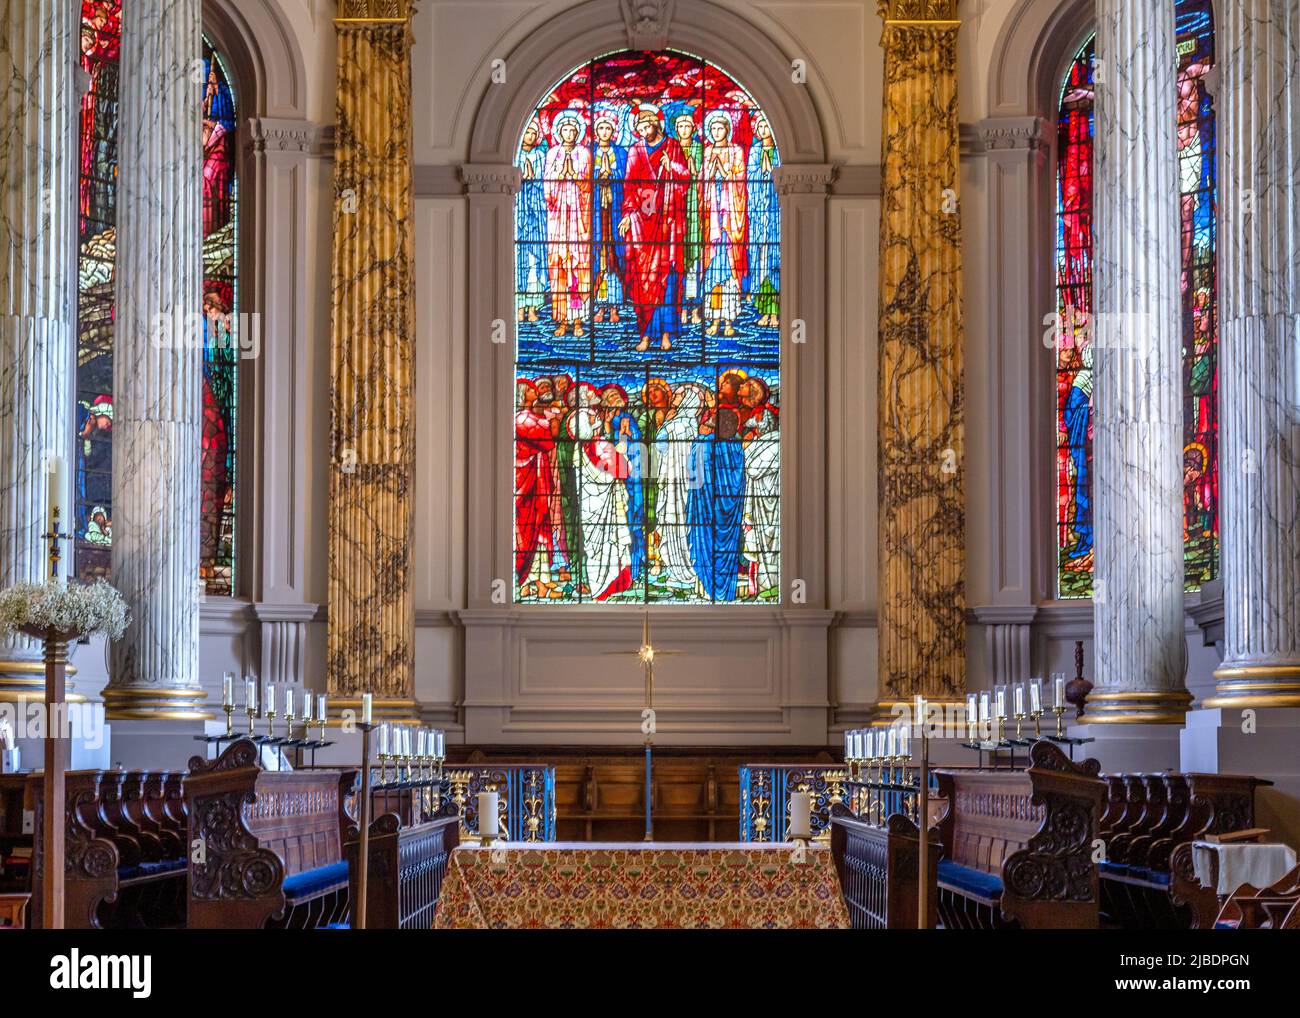 St. Philips Cathedral interior, Birmingham, England. Stock Photo